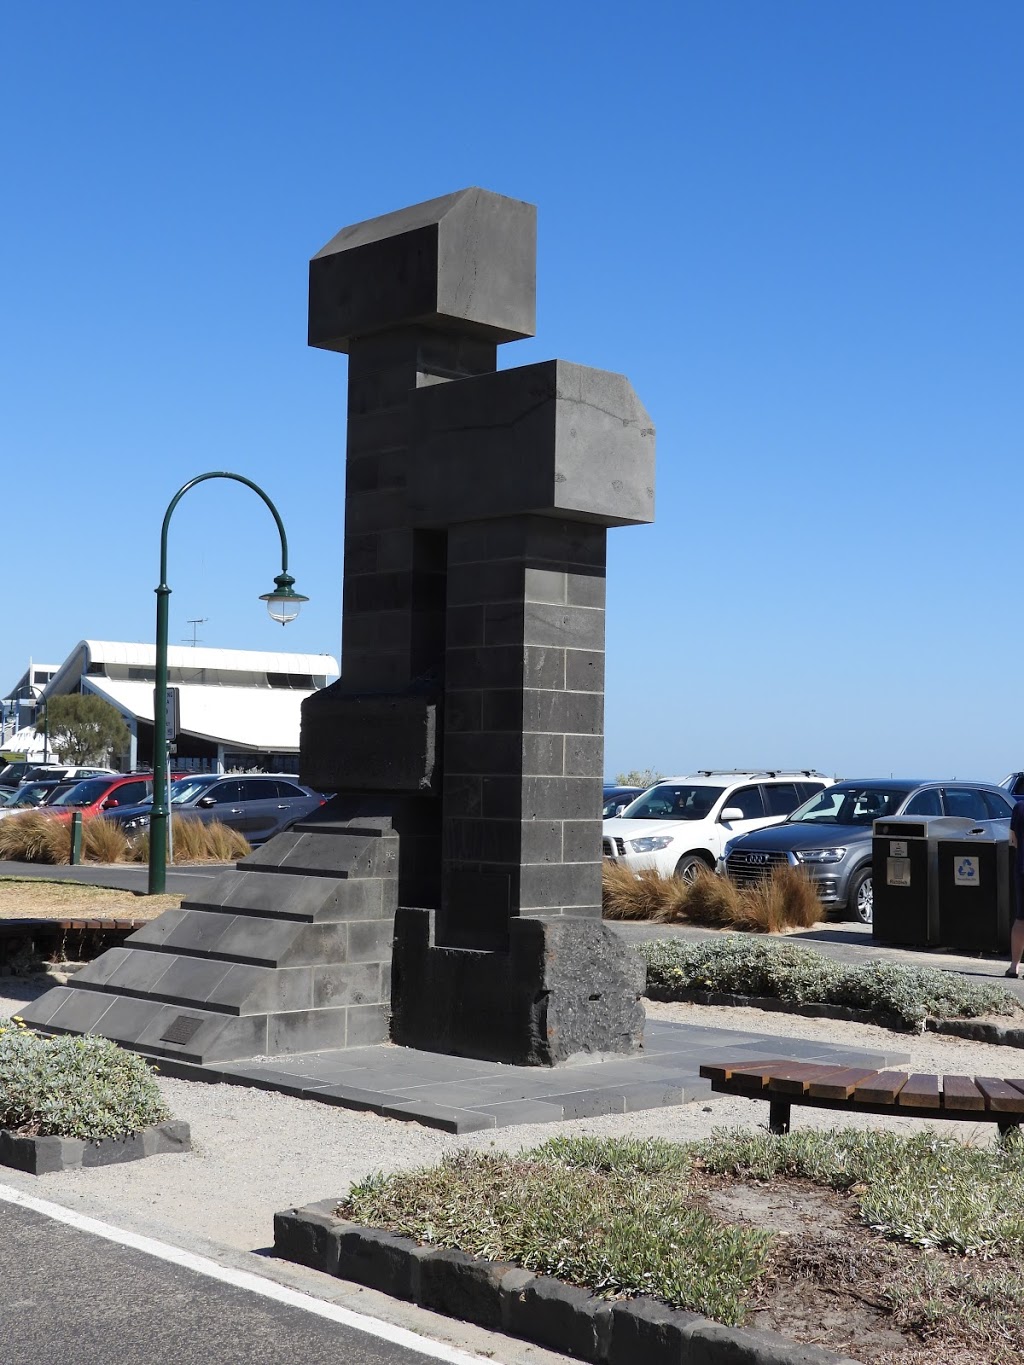 Bicentennial Memorial | Beach St, Port Melbourne VIC 3207, Australia | Phone: (03) 9209 6777